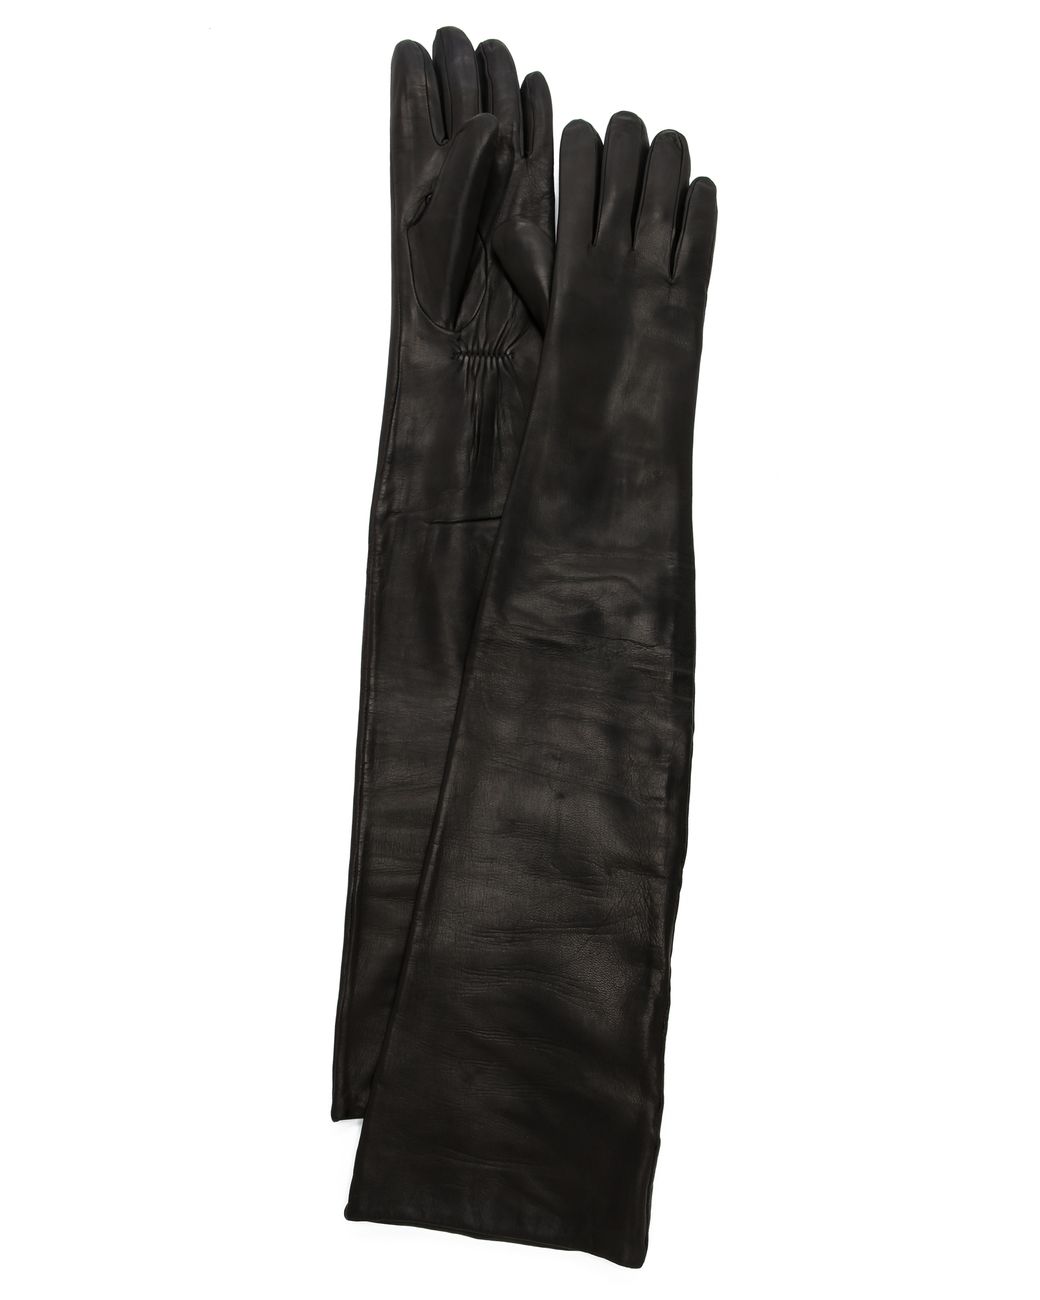 Carolina Amato Leather Opera Gloves in Black | Lyst